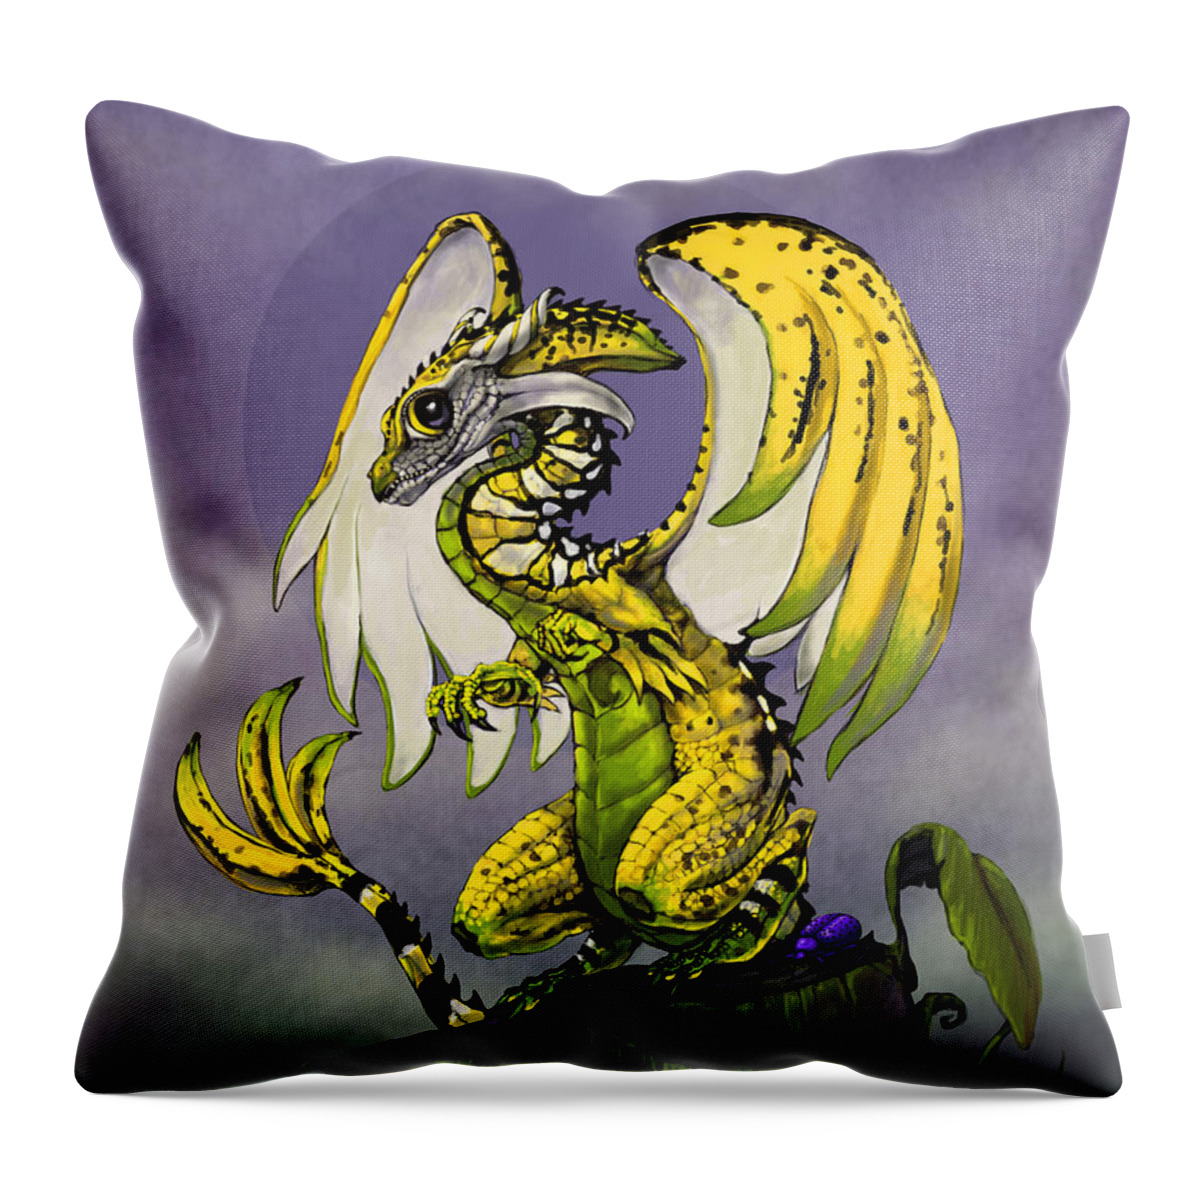 Banana Throw Pillow featuring the digital art Banana Dragon by Stanley Morrison